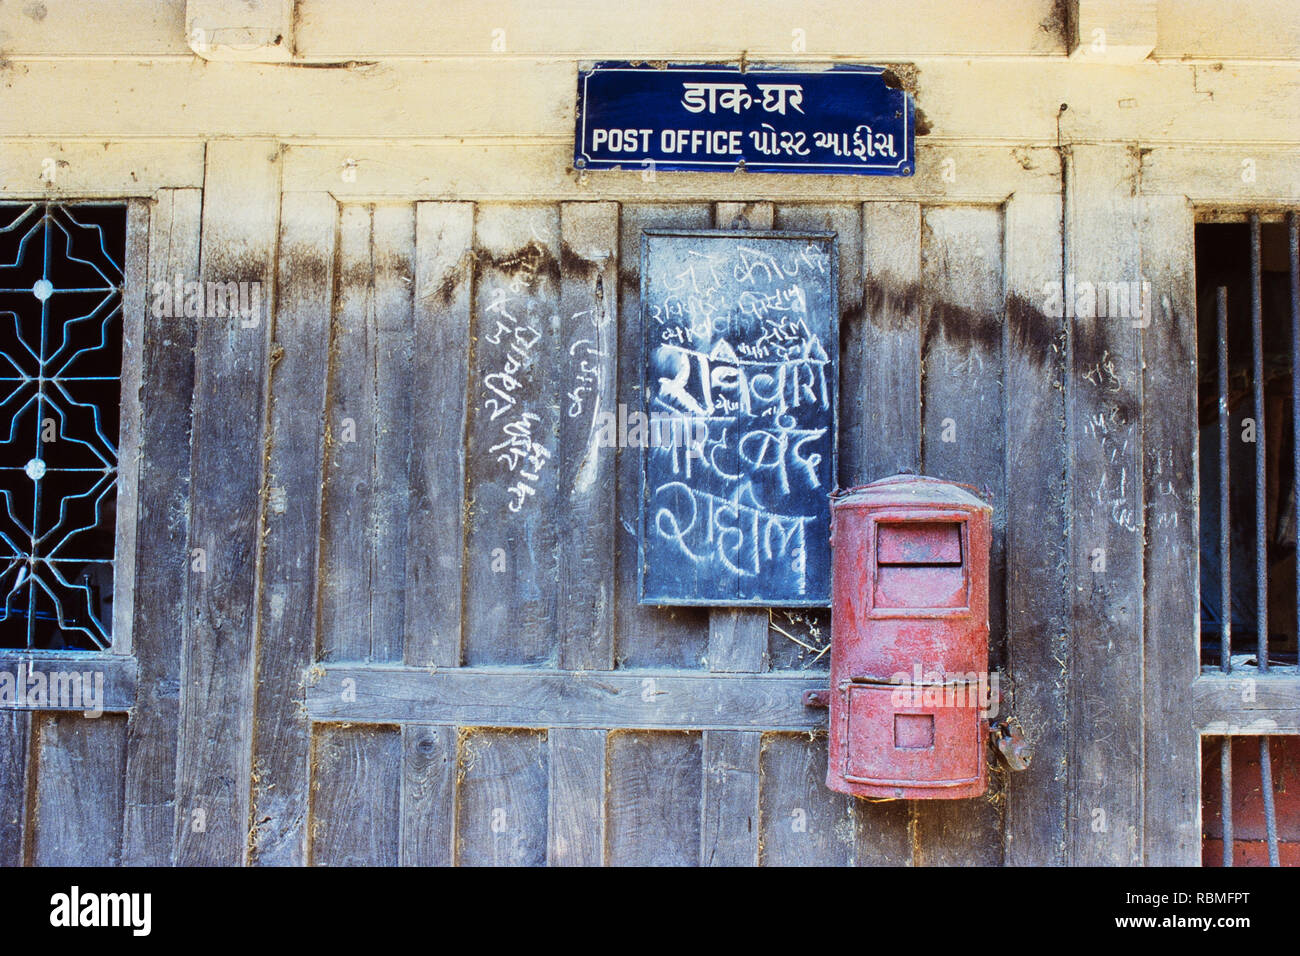 Post office with information sign, Nere Village, Panvel, Maharashtra, India, Asia Stock Photo